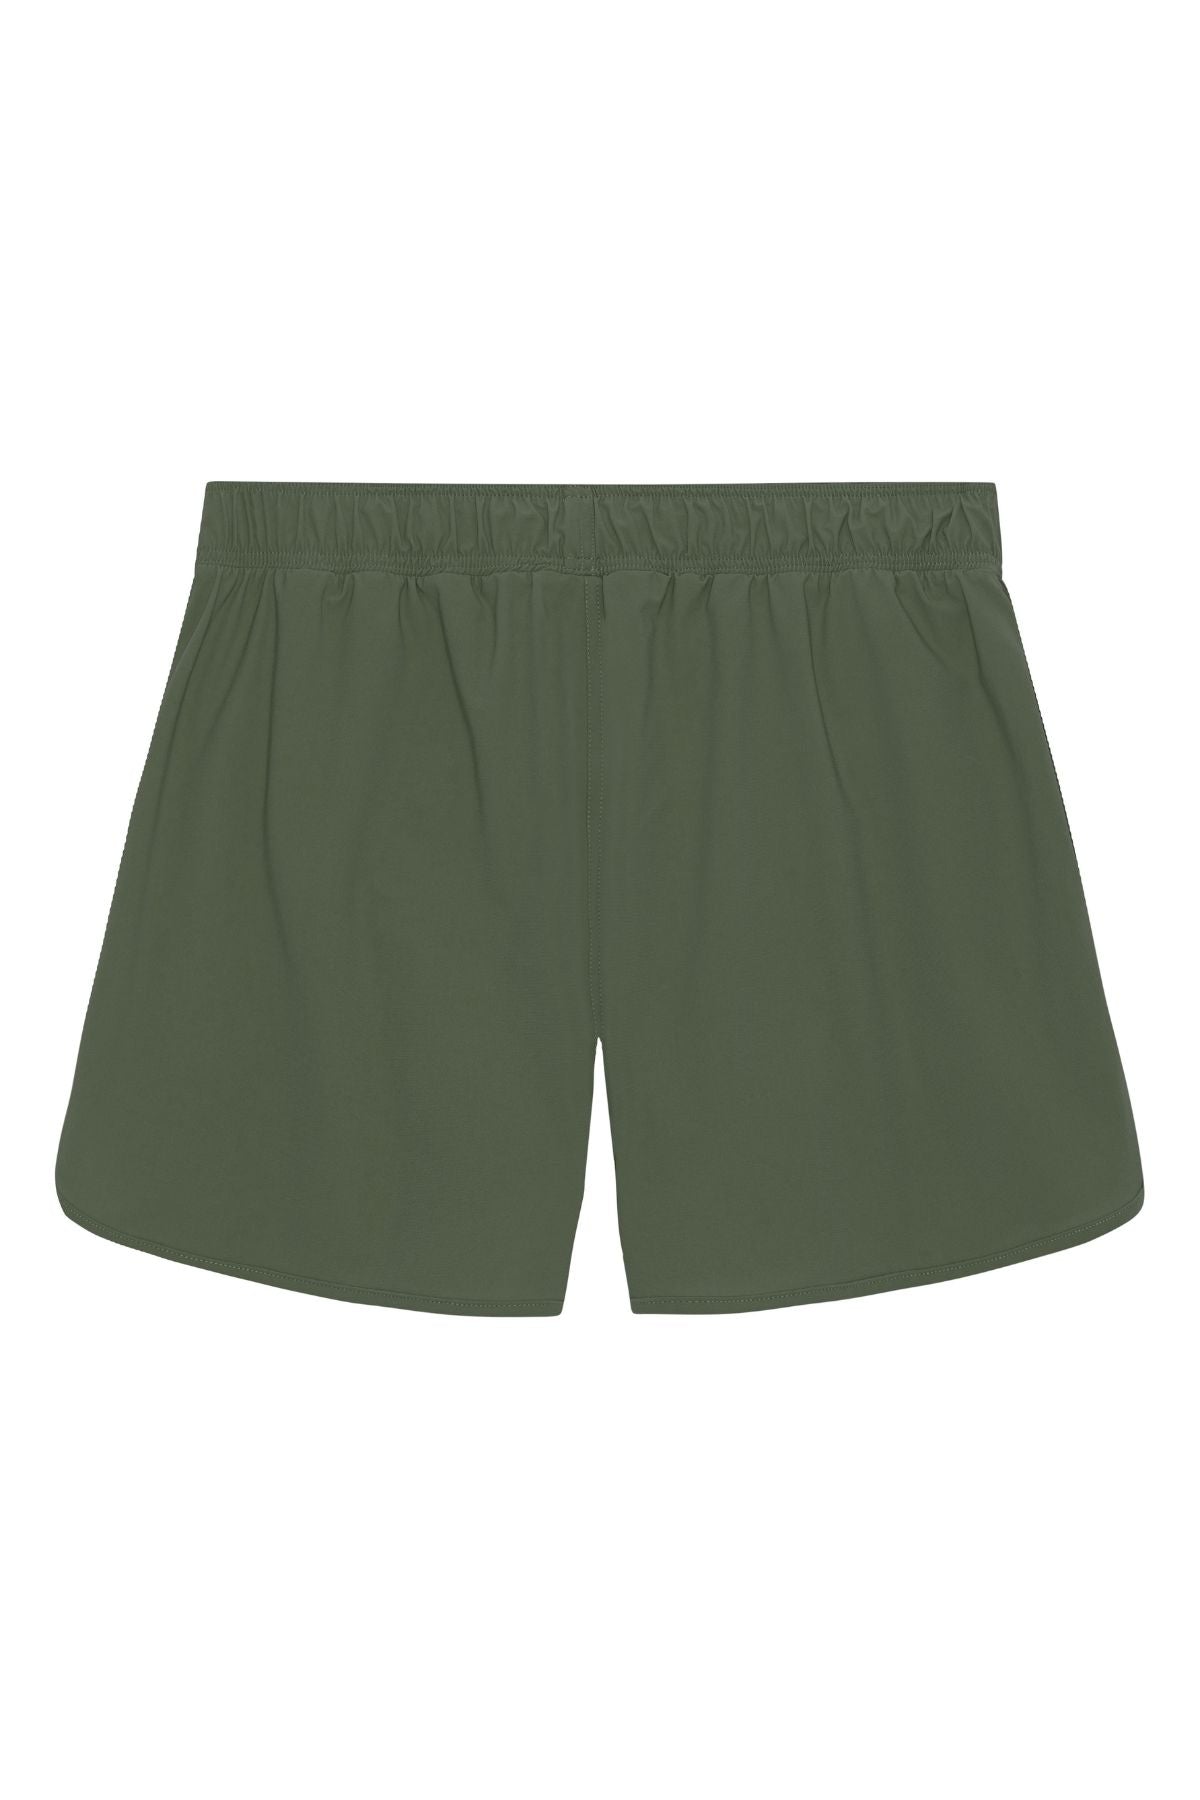 Balian herre shorts - Kale